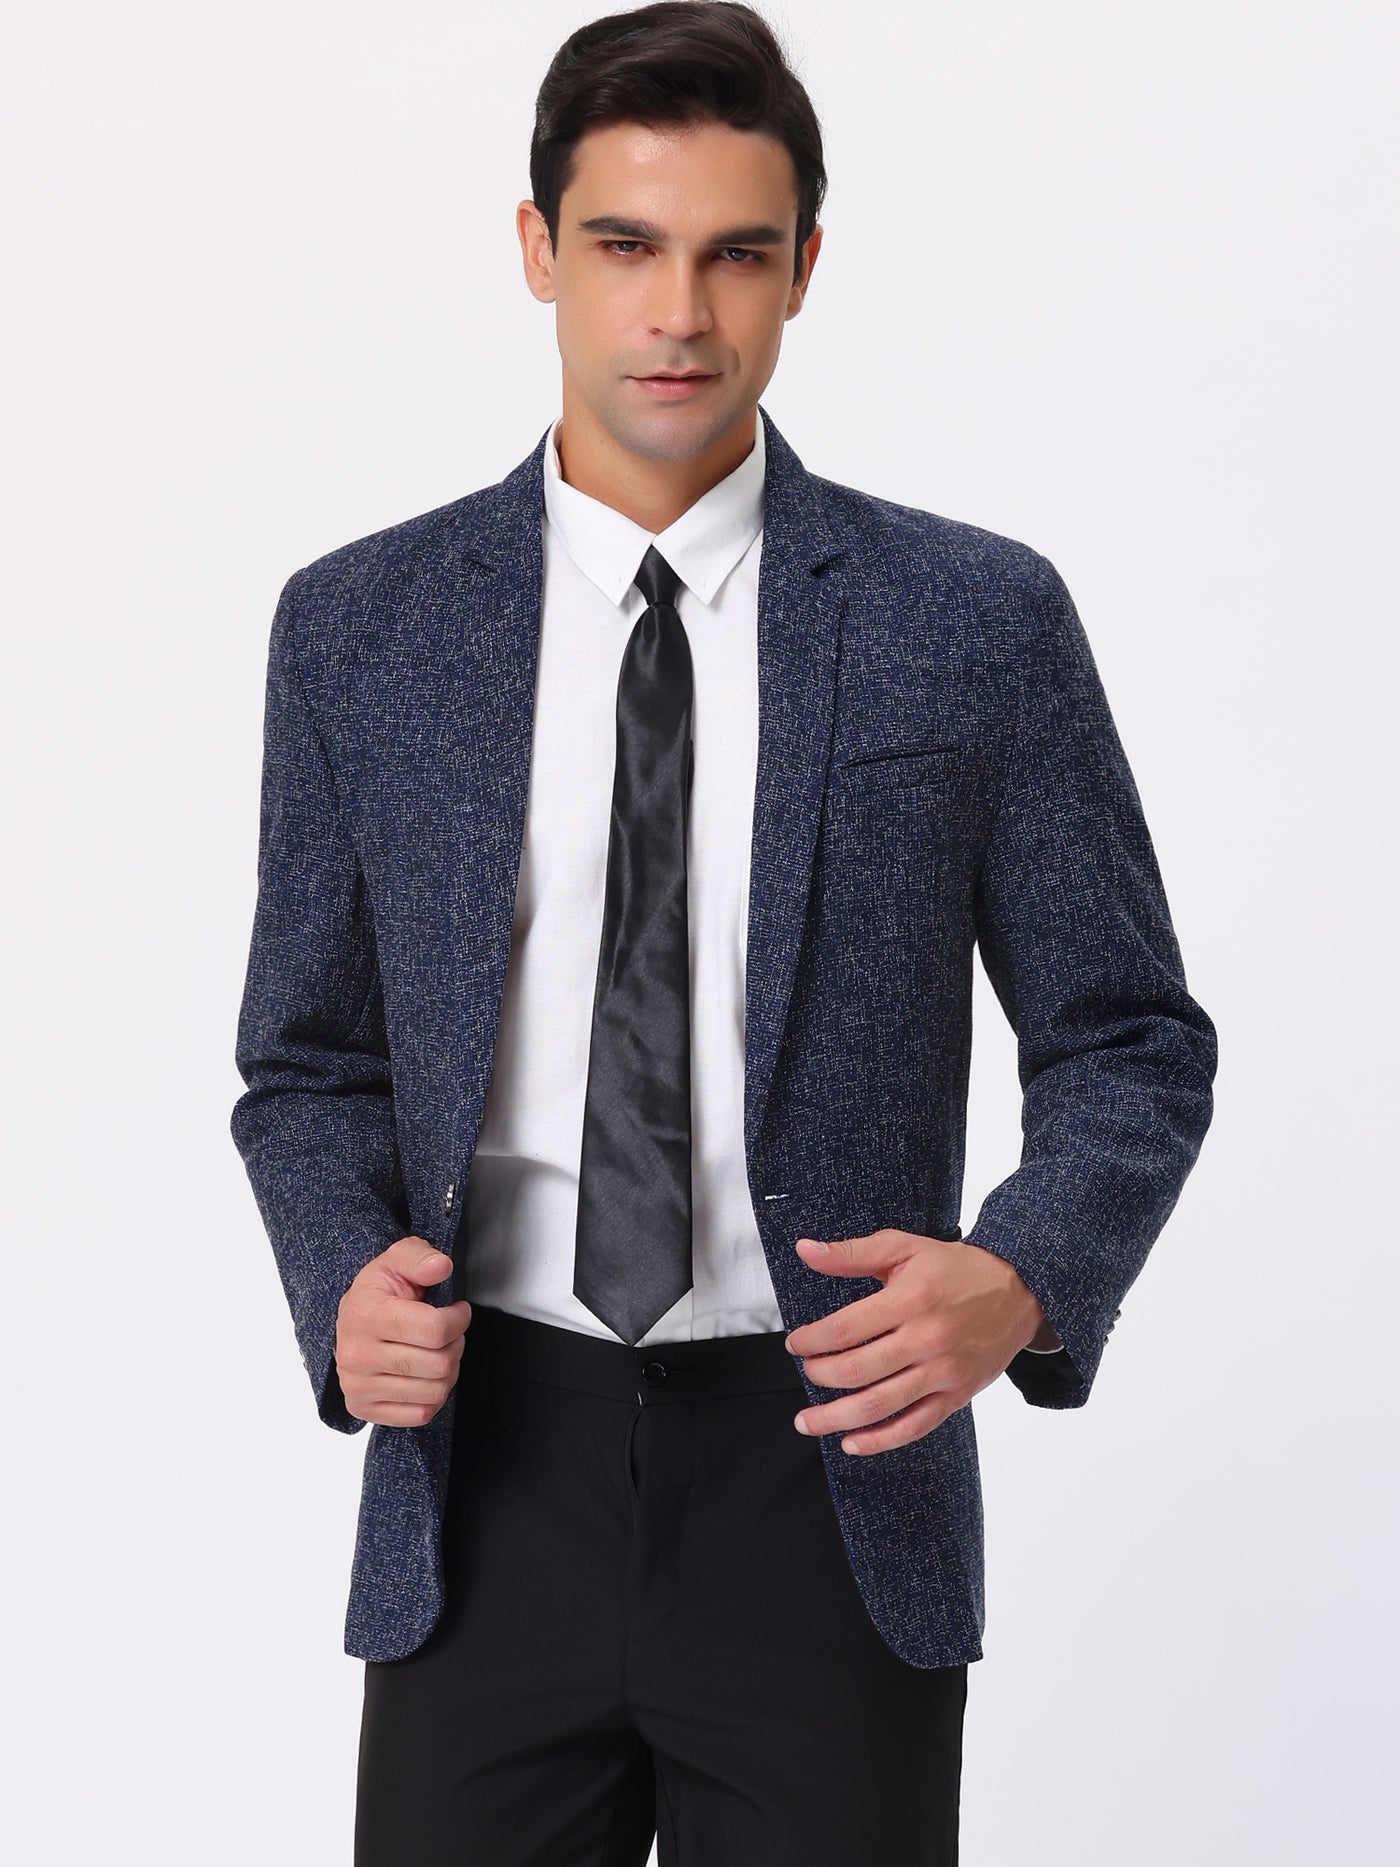 Bublédon Men's Business Blazer Slim Fit Formal Wedding Tuxedo Suit Jacket Sports Coat